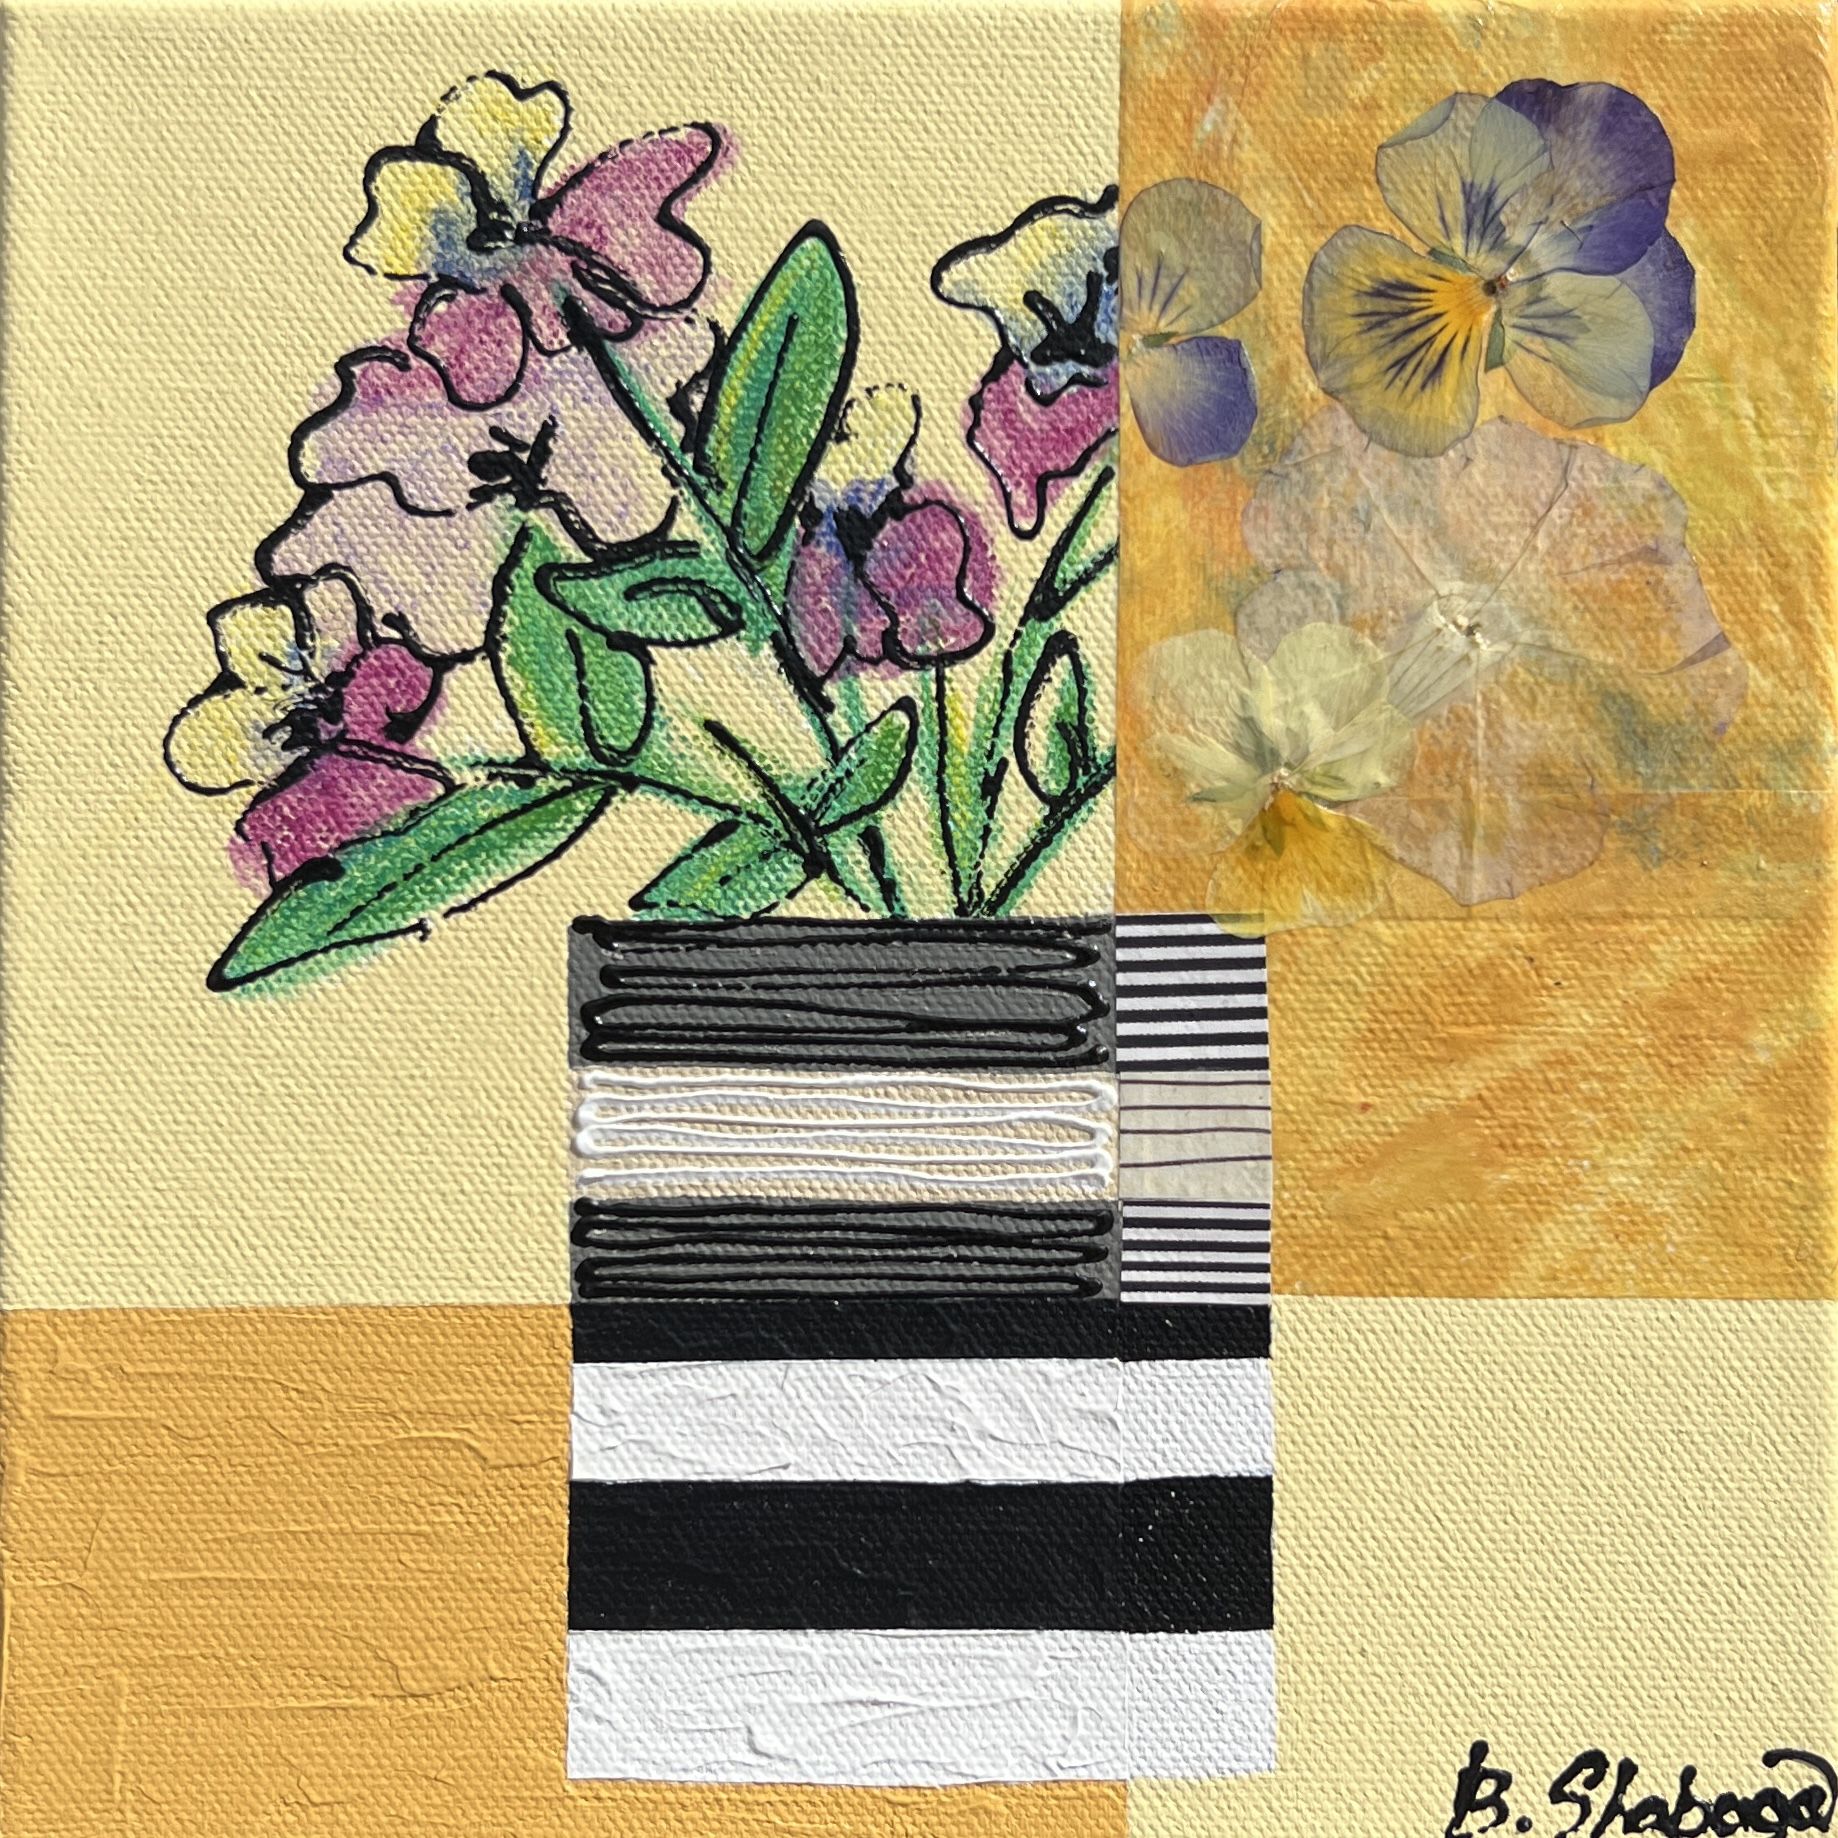 Floral Study 3 - Pansies and Petunias